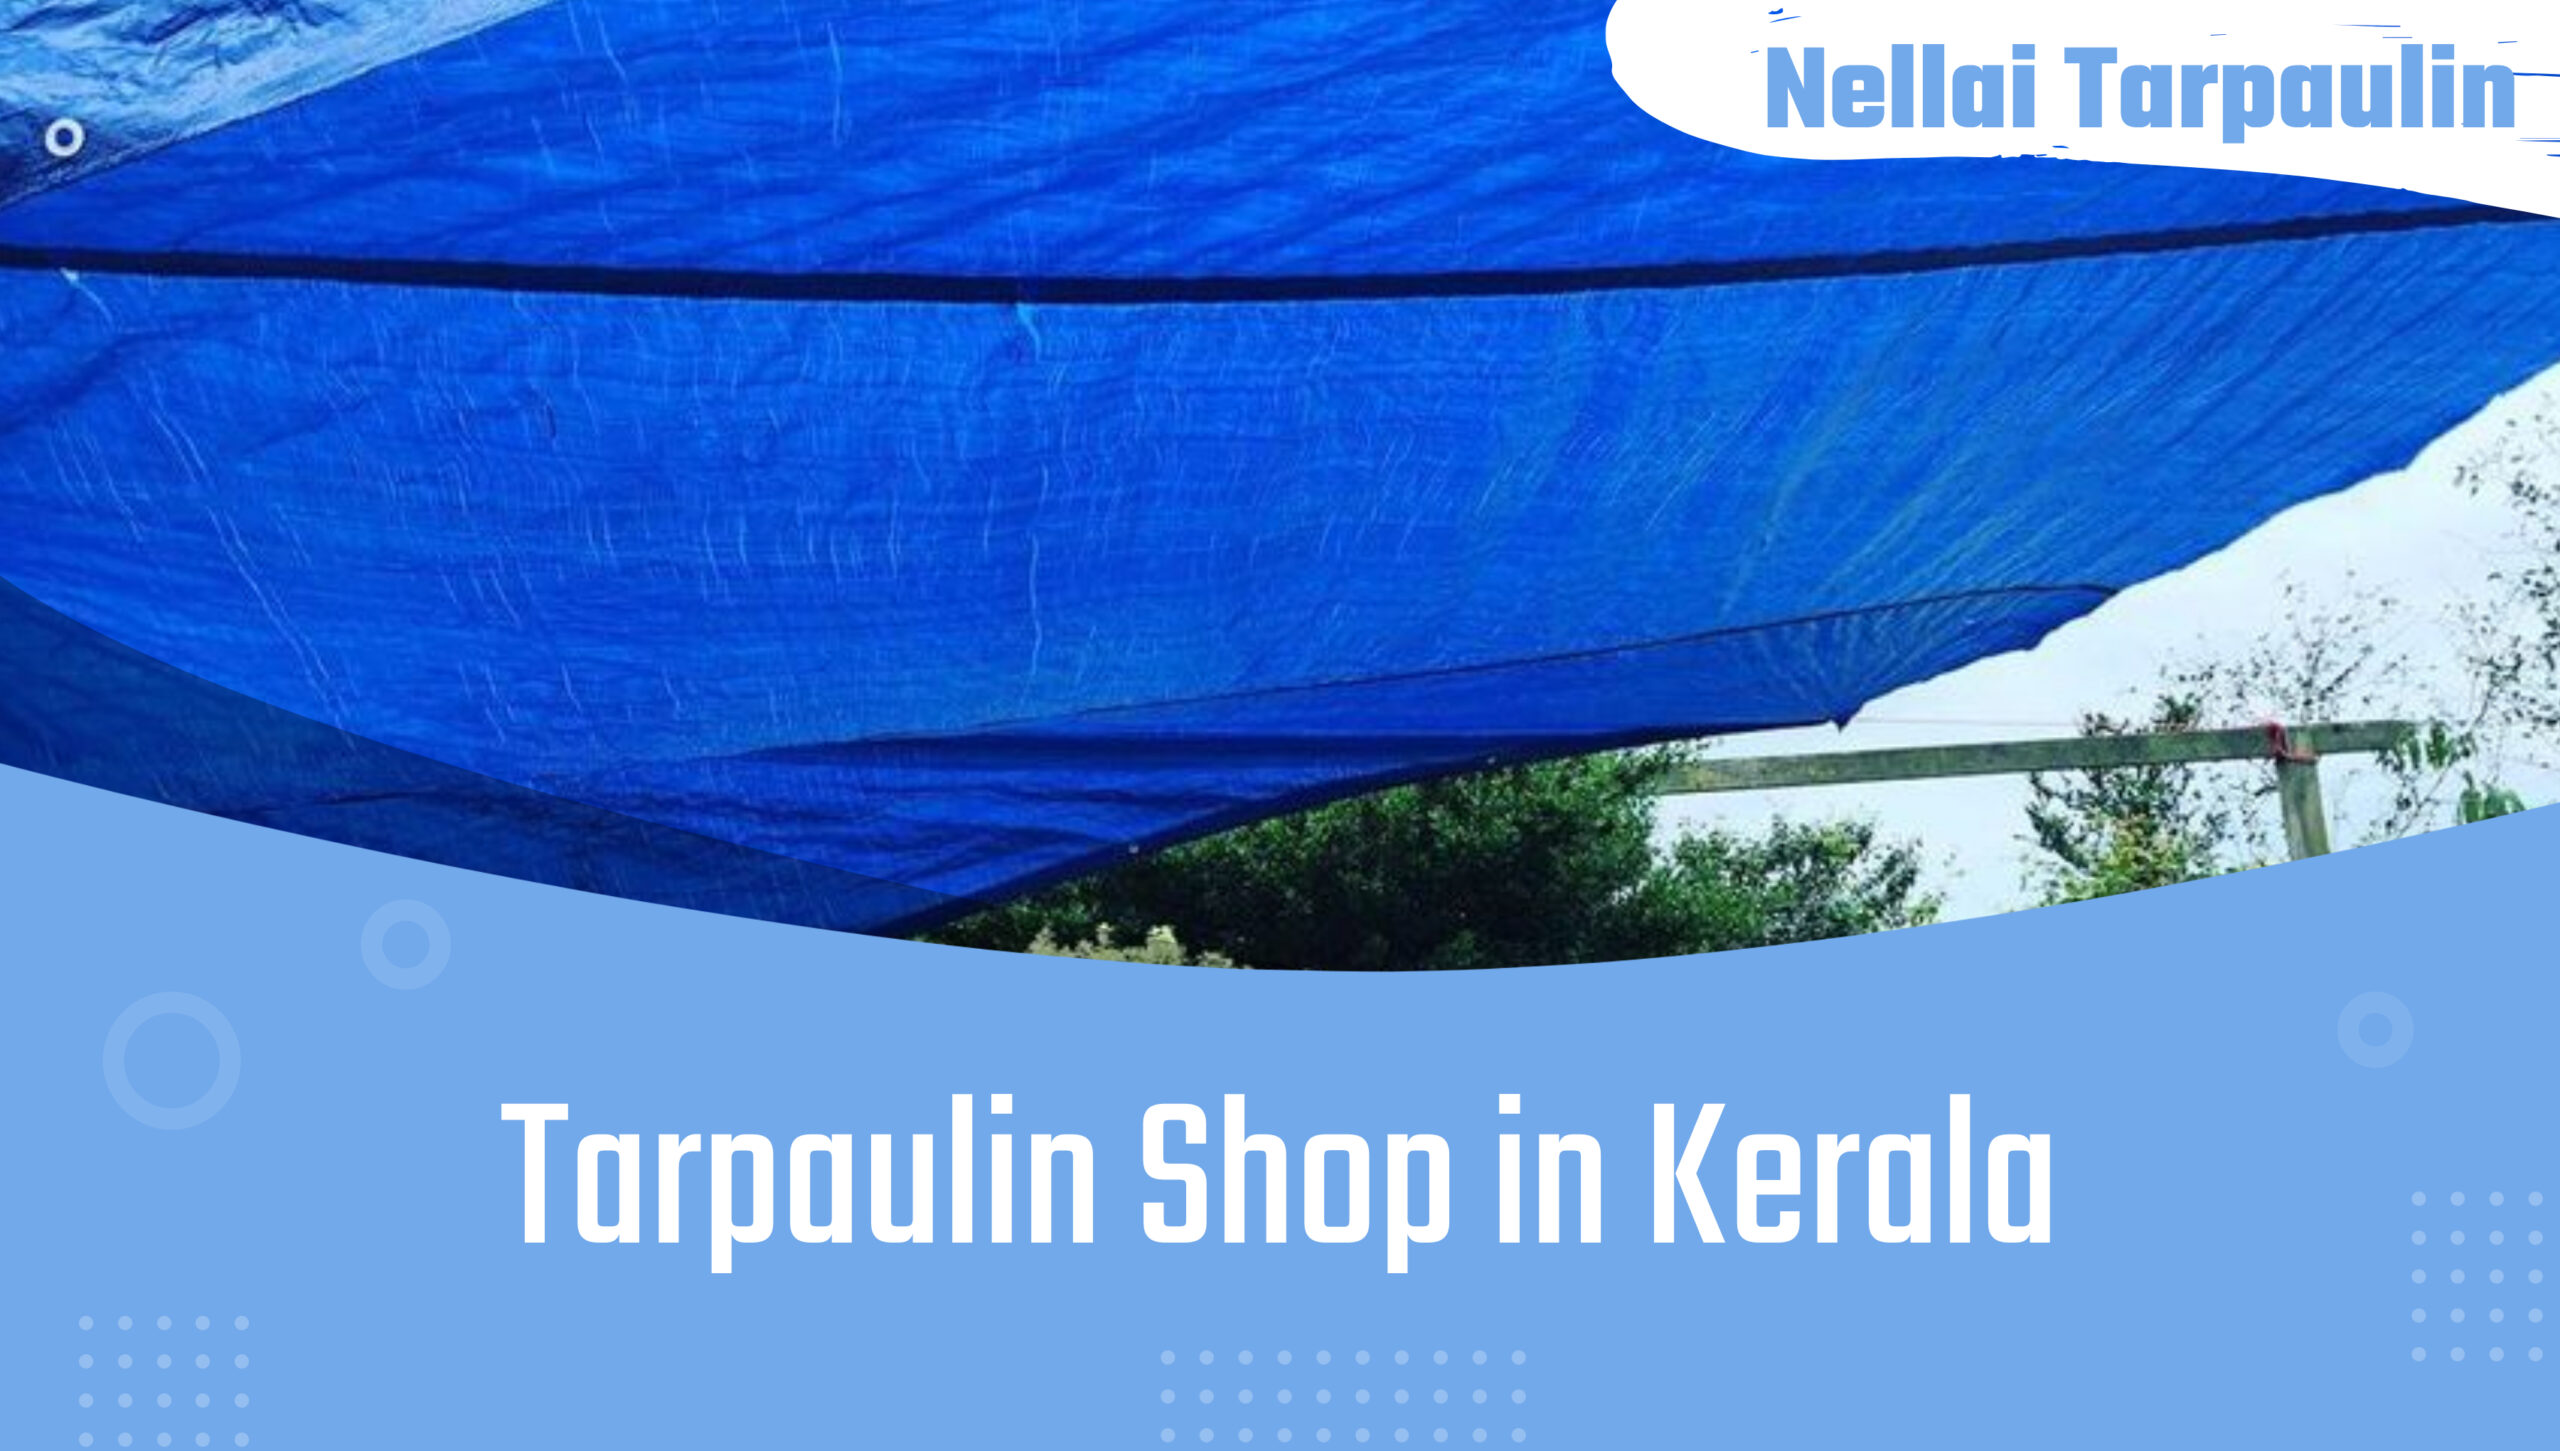 Tarpaulin shop in Kerala | Tarpaulin Shop